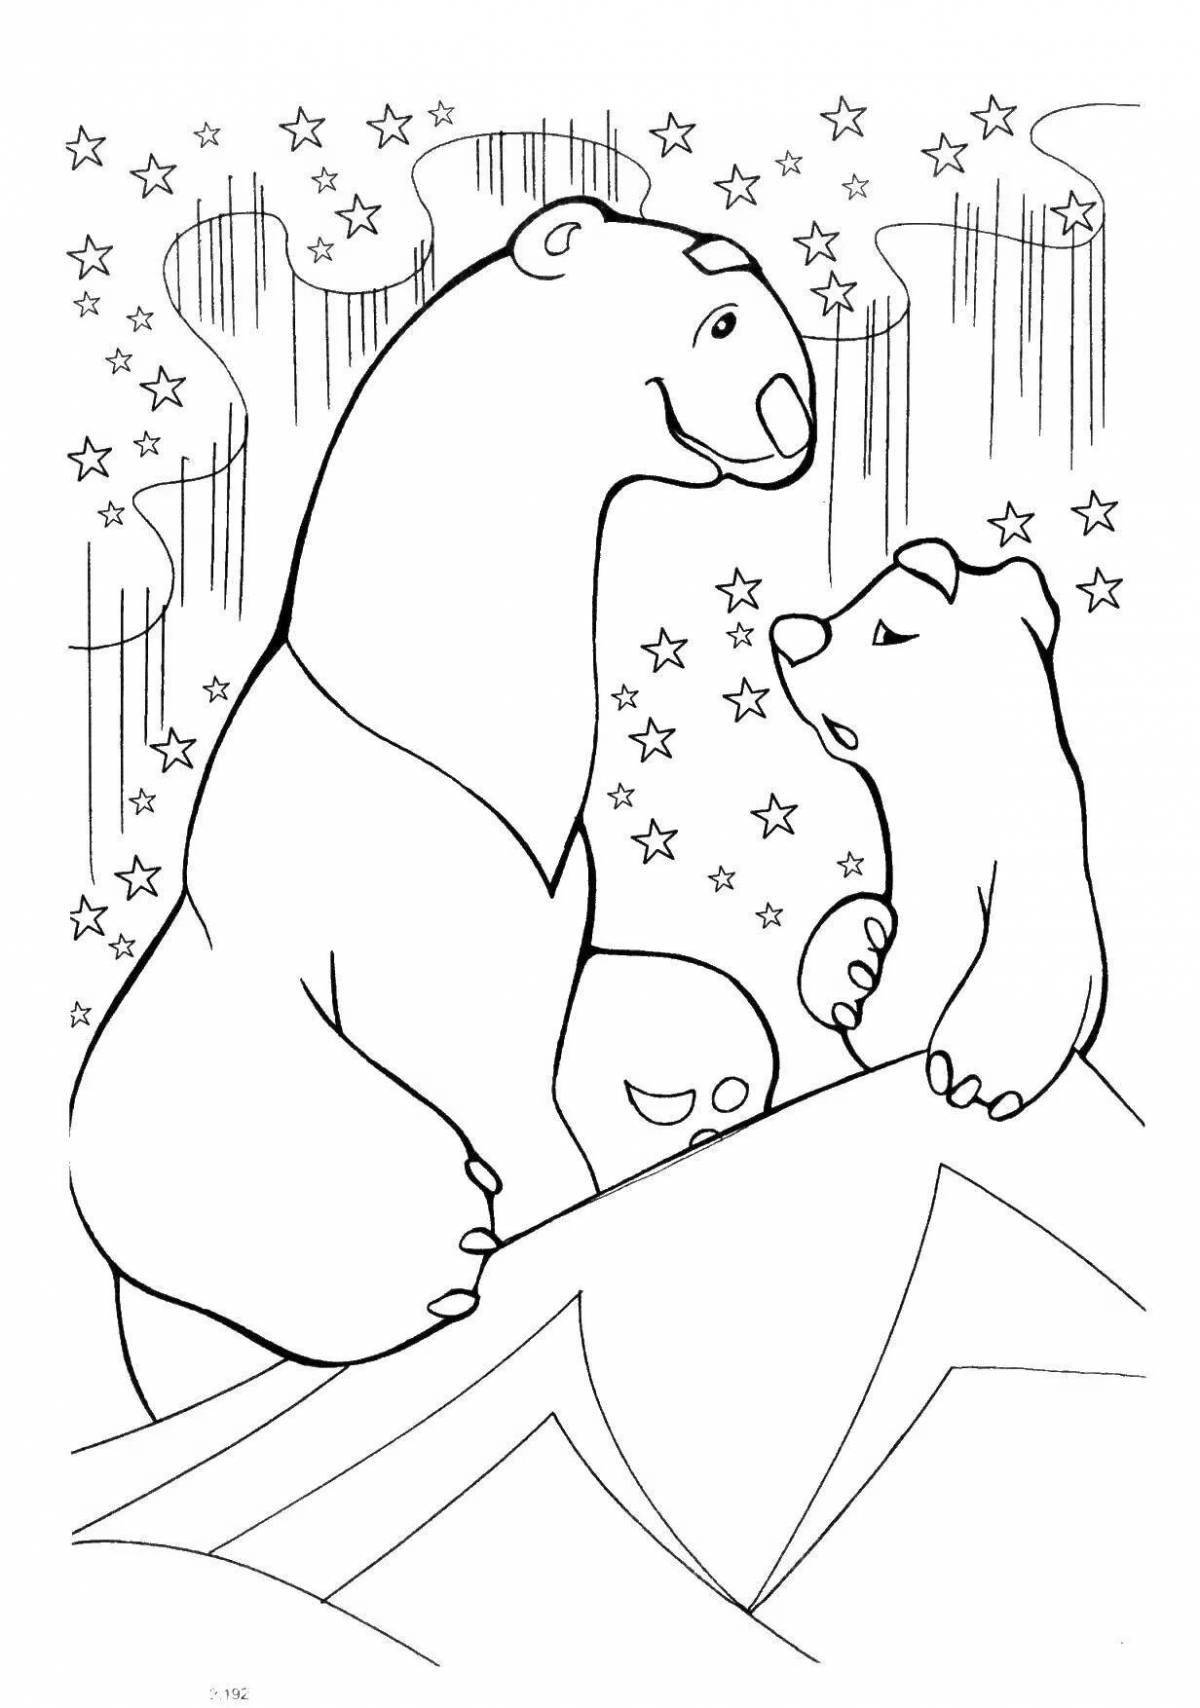 Fun polar bear coloring pattern